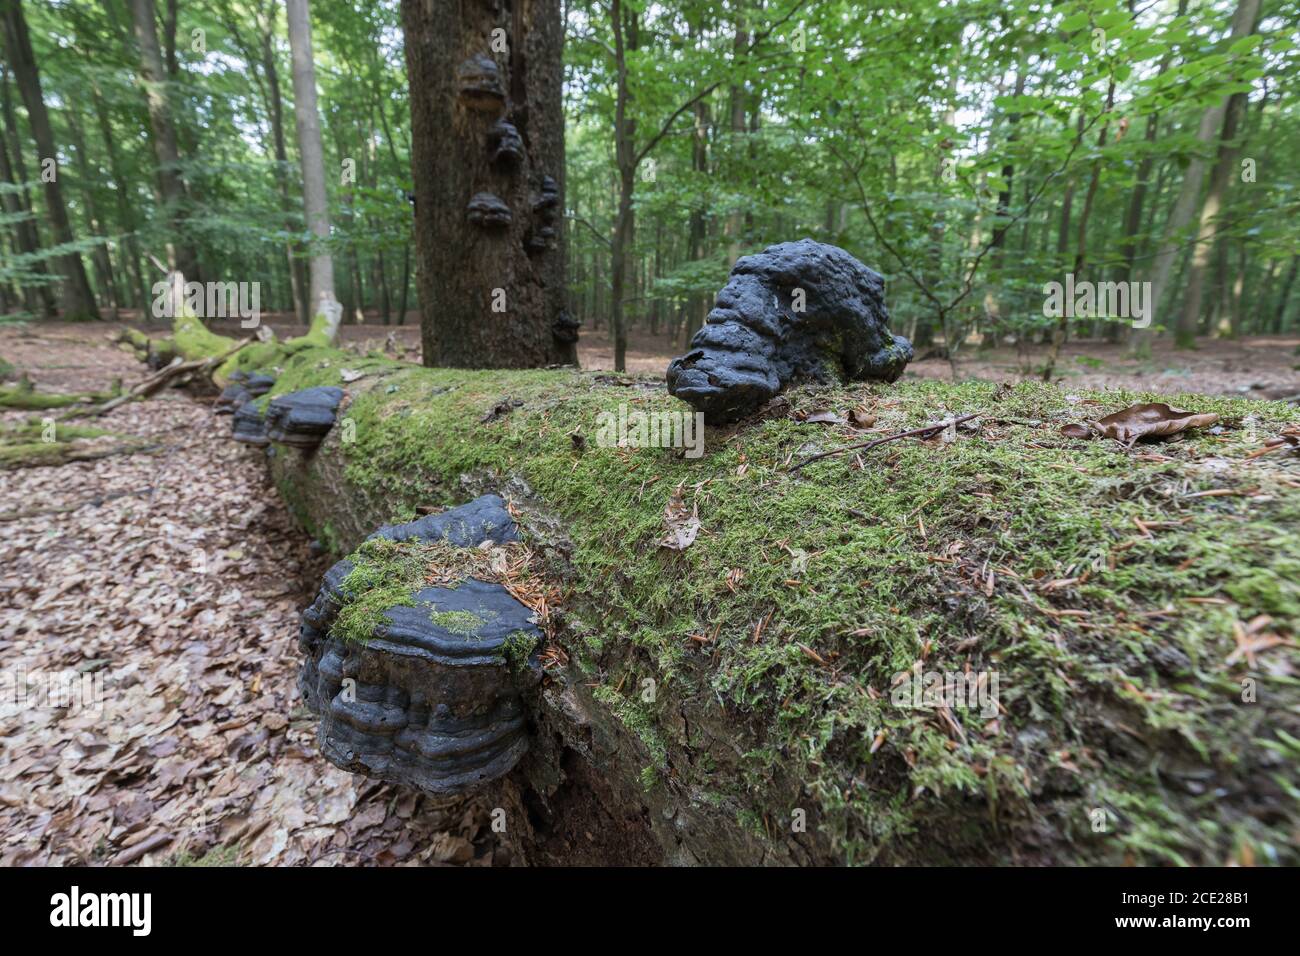 tinder sponge mushrooms on deadwood in natural forest Stock Photo